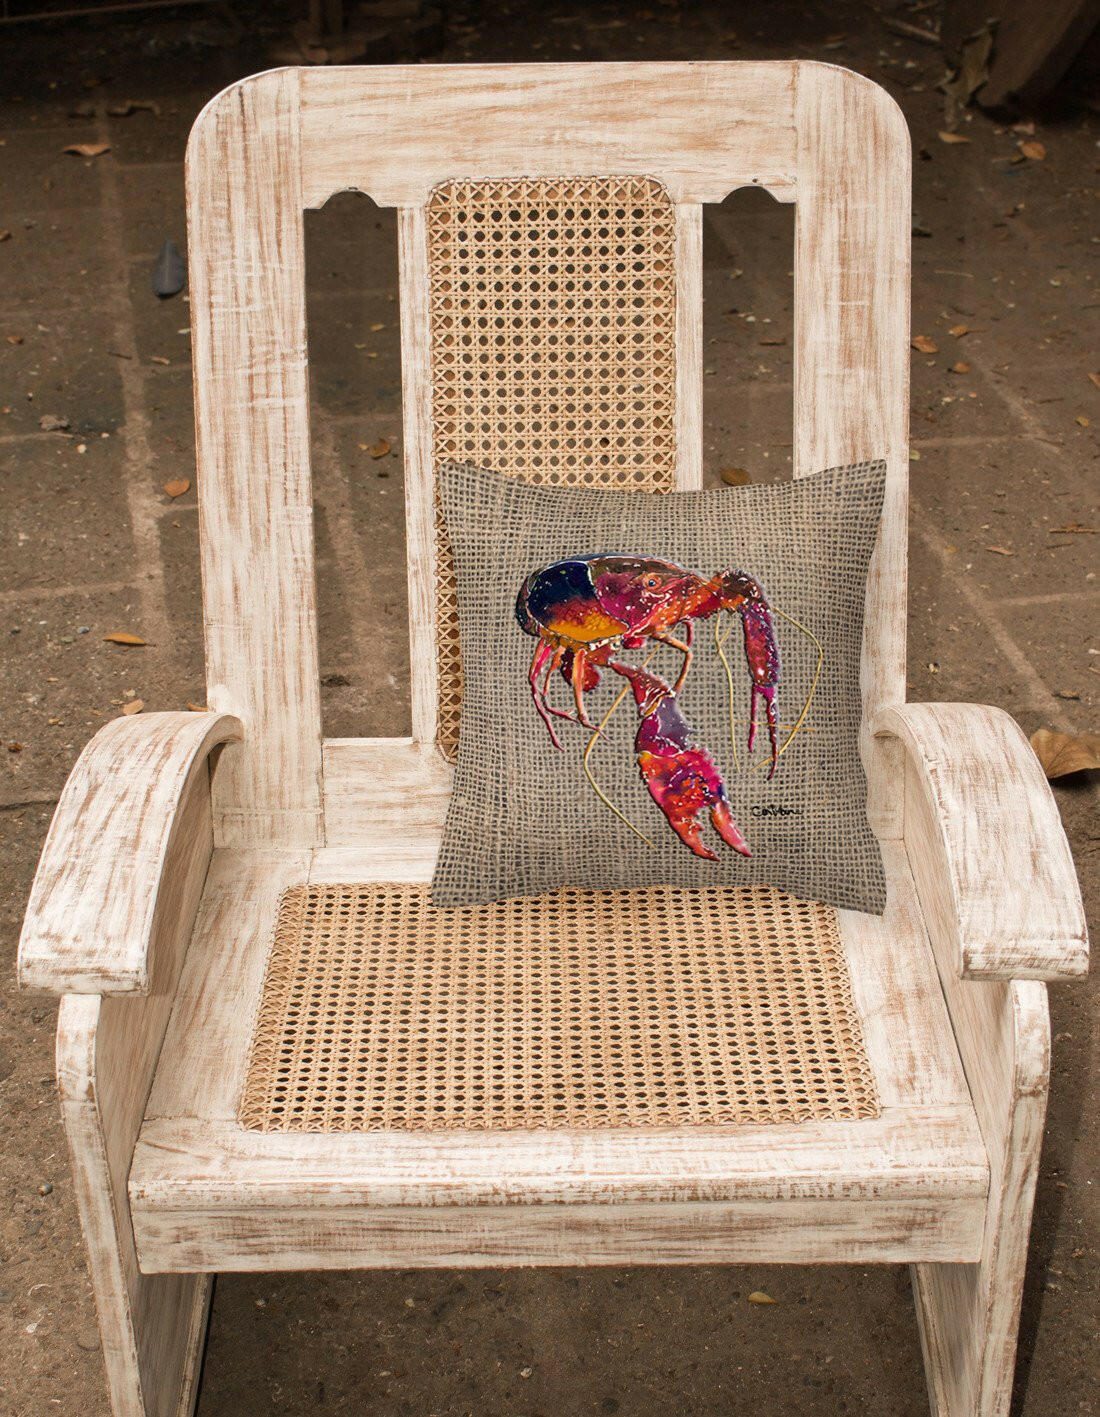 Crawfish Decorative   Canvas Fabric Pillow - the-store.com